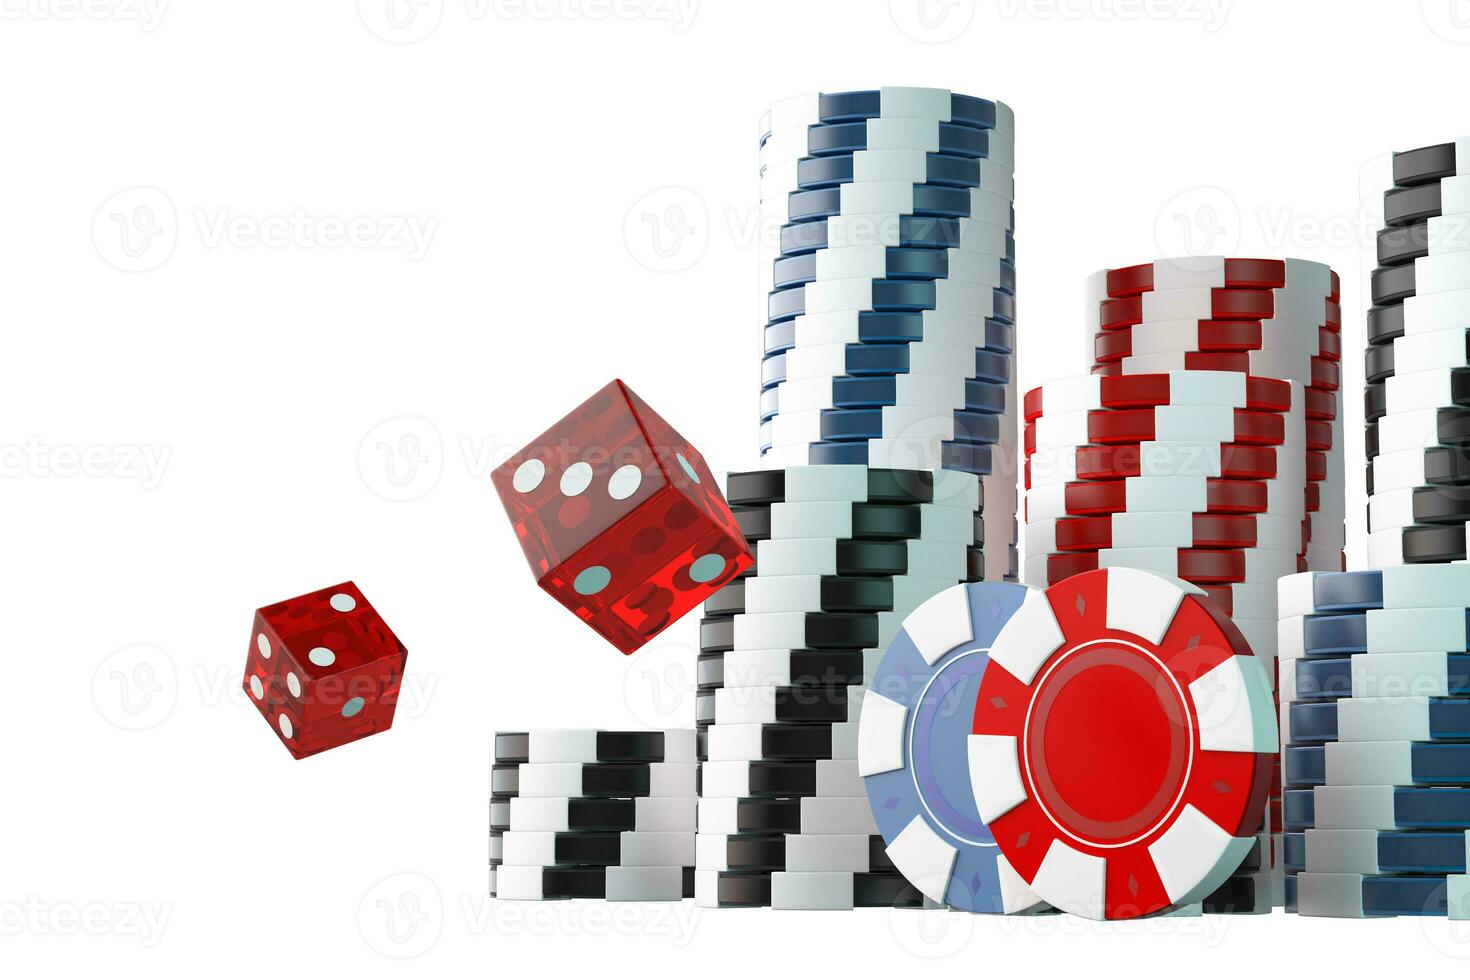 3d Kasino Glücksspiel Poker Token und Würfel foto